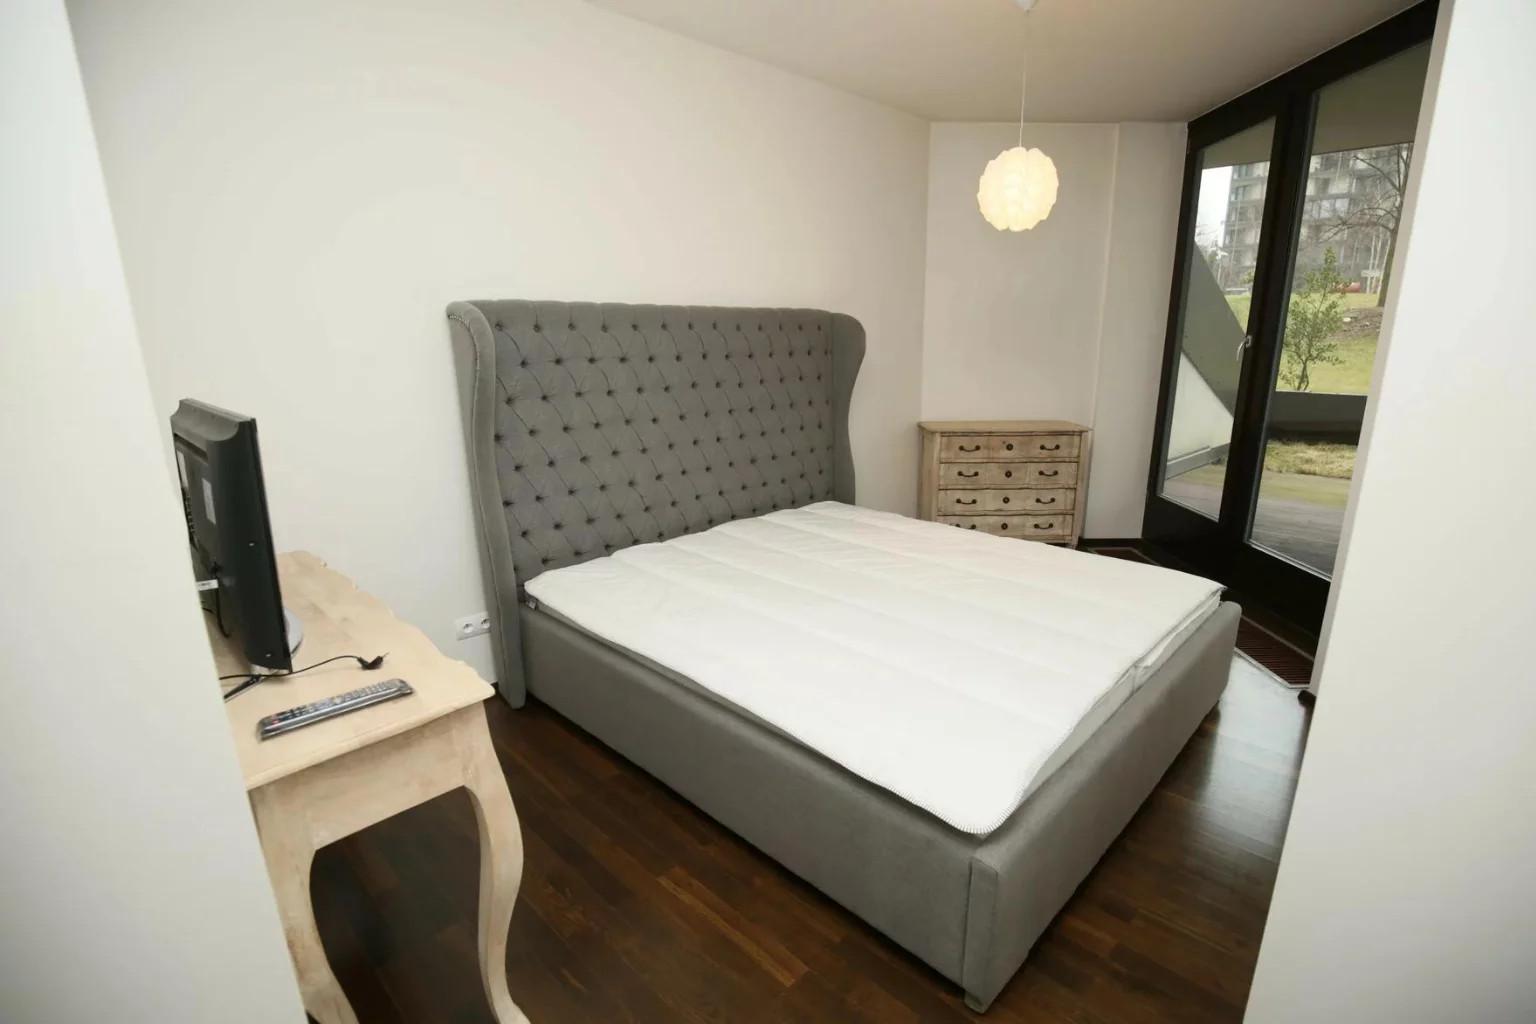 bed in a bedroom in a flat in the Czech Republic